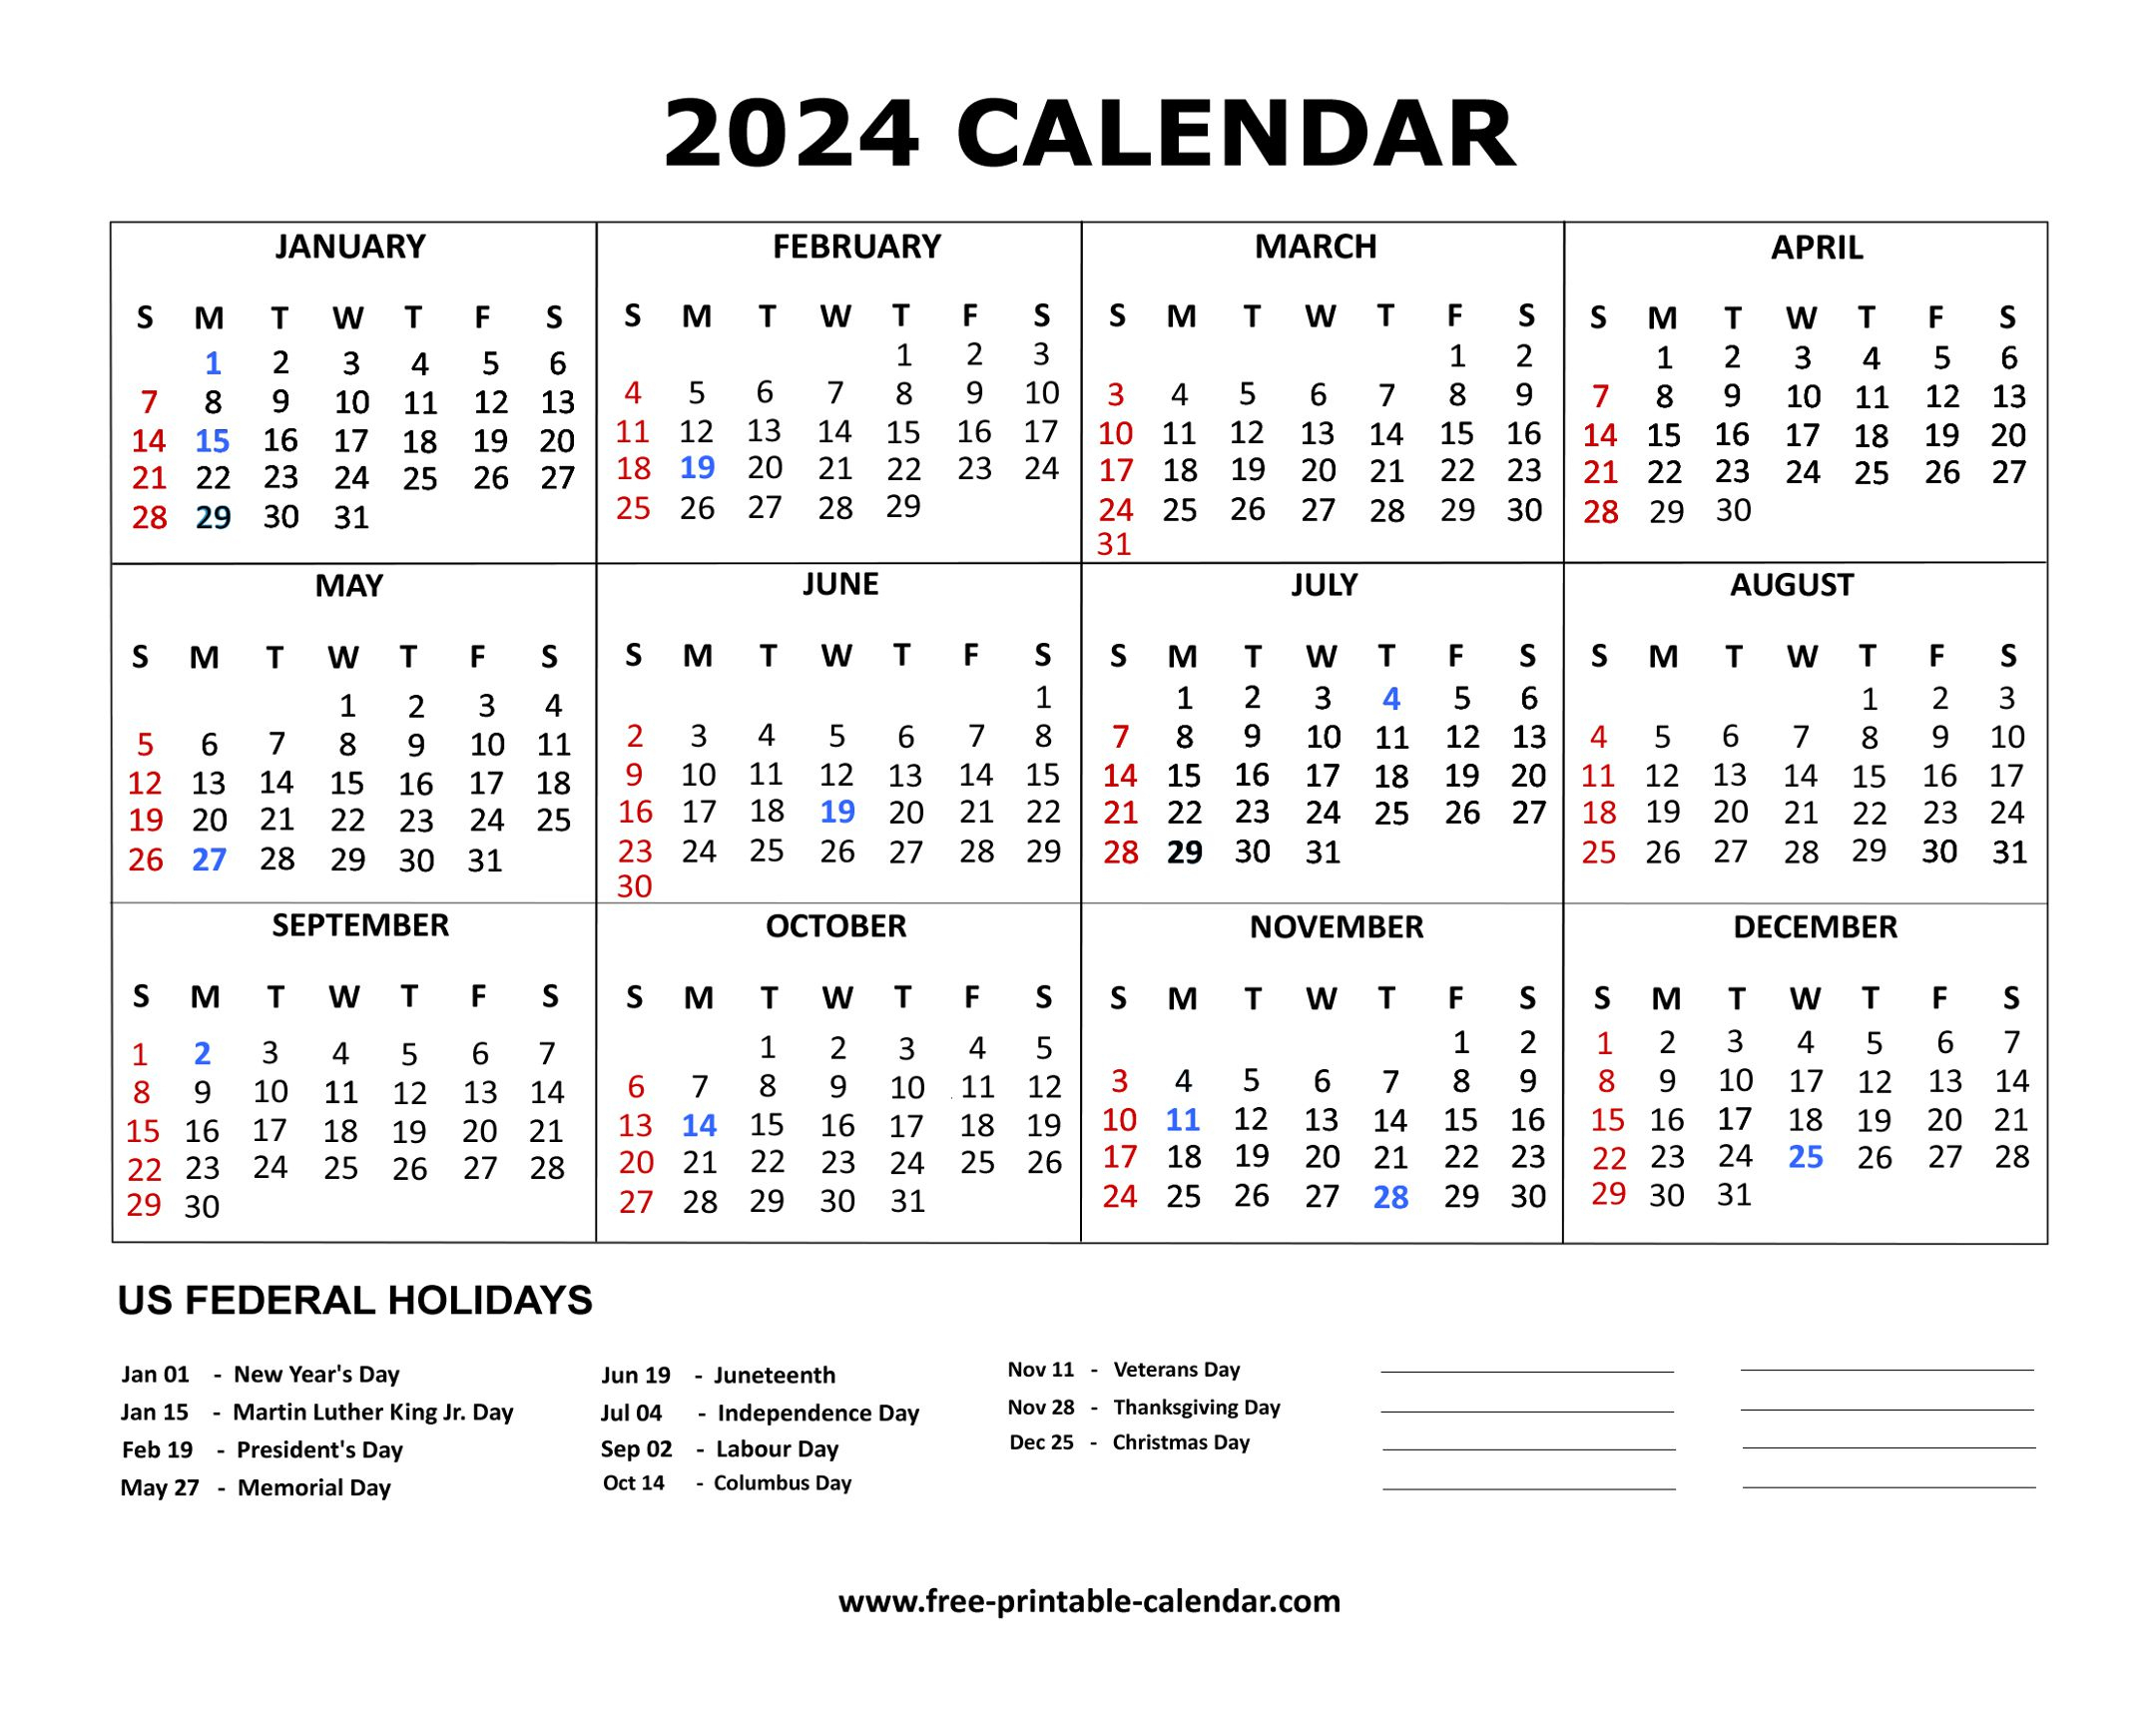 2024 Calendar | Printable Calendar 2024 With Us Holidays